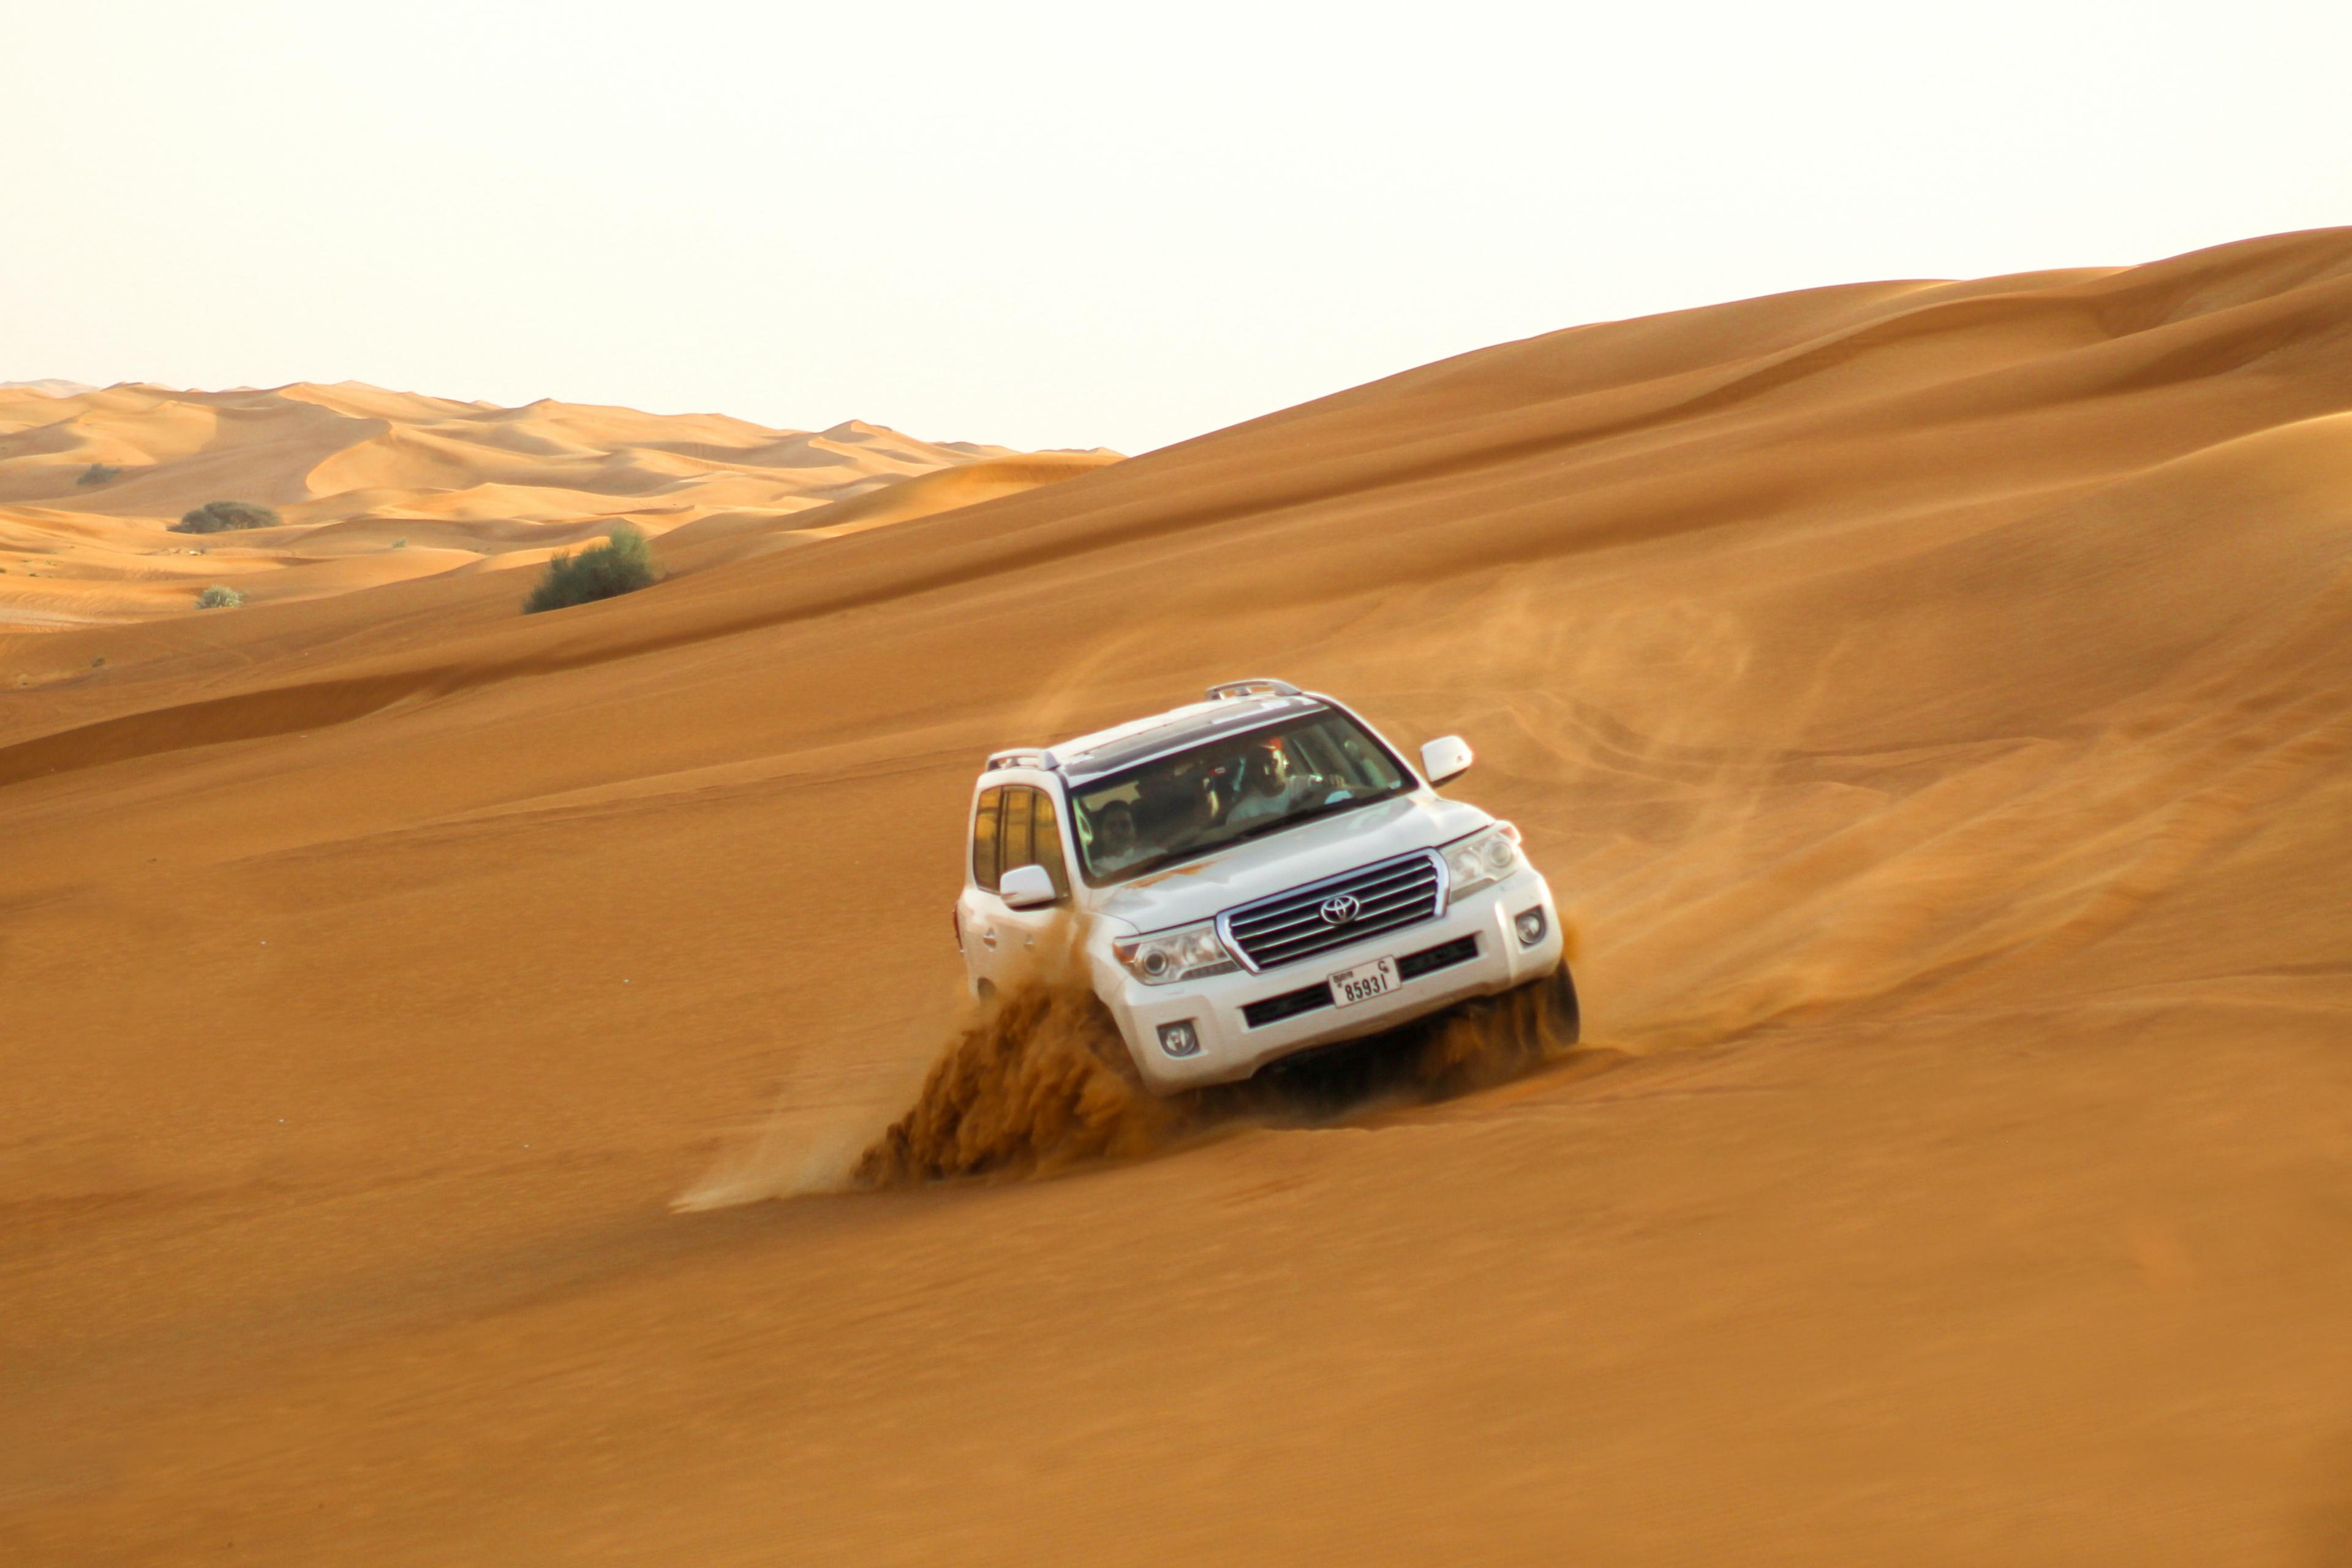 Dune bashing Dubai | Adventures with Richy life Club